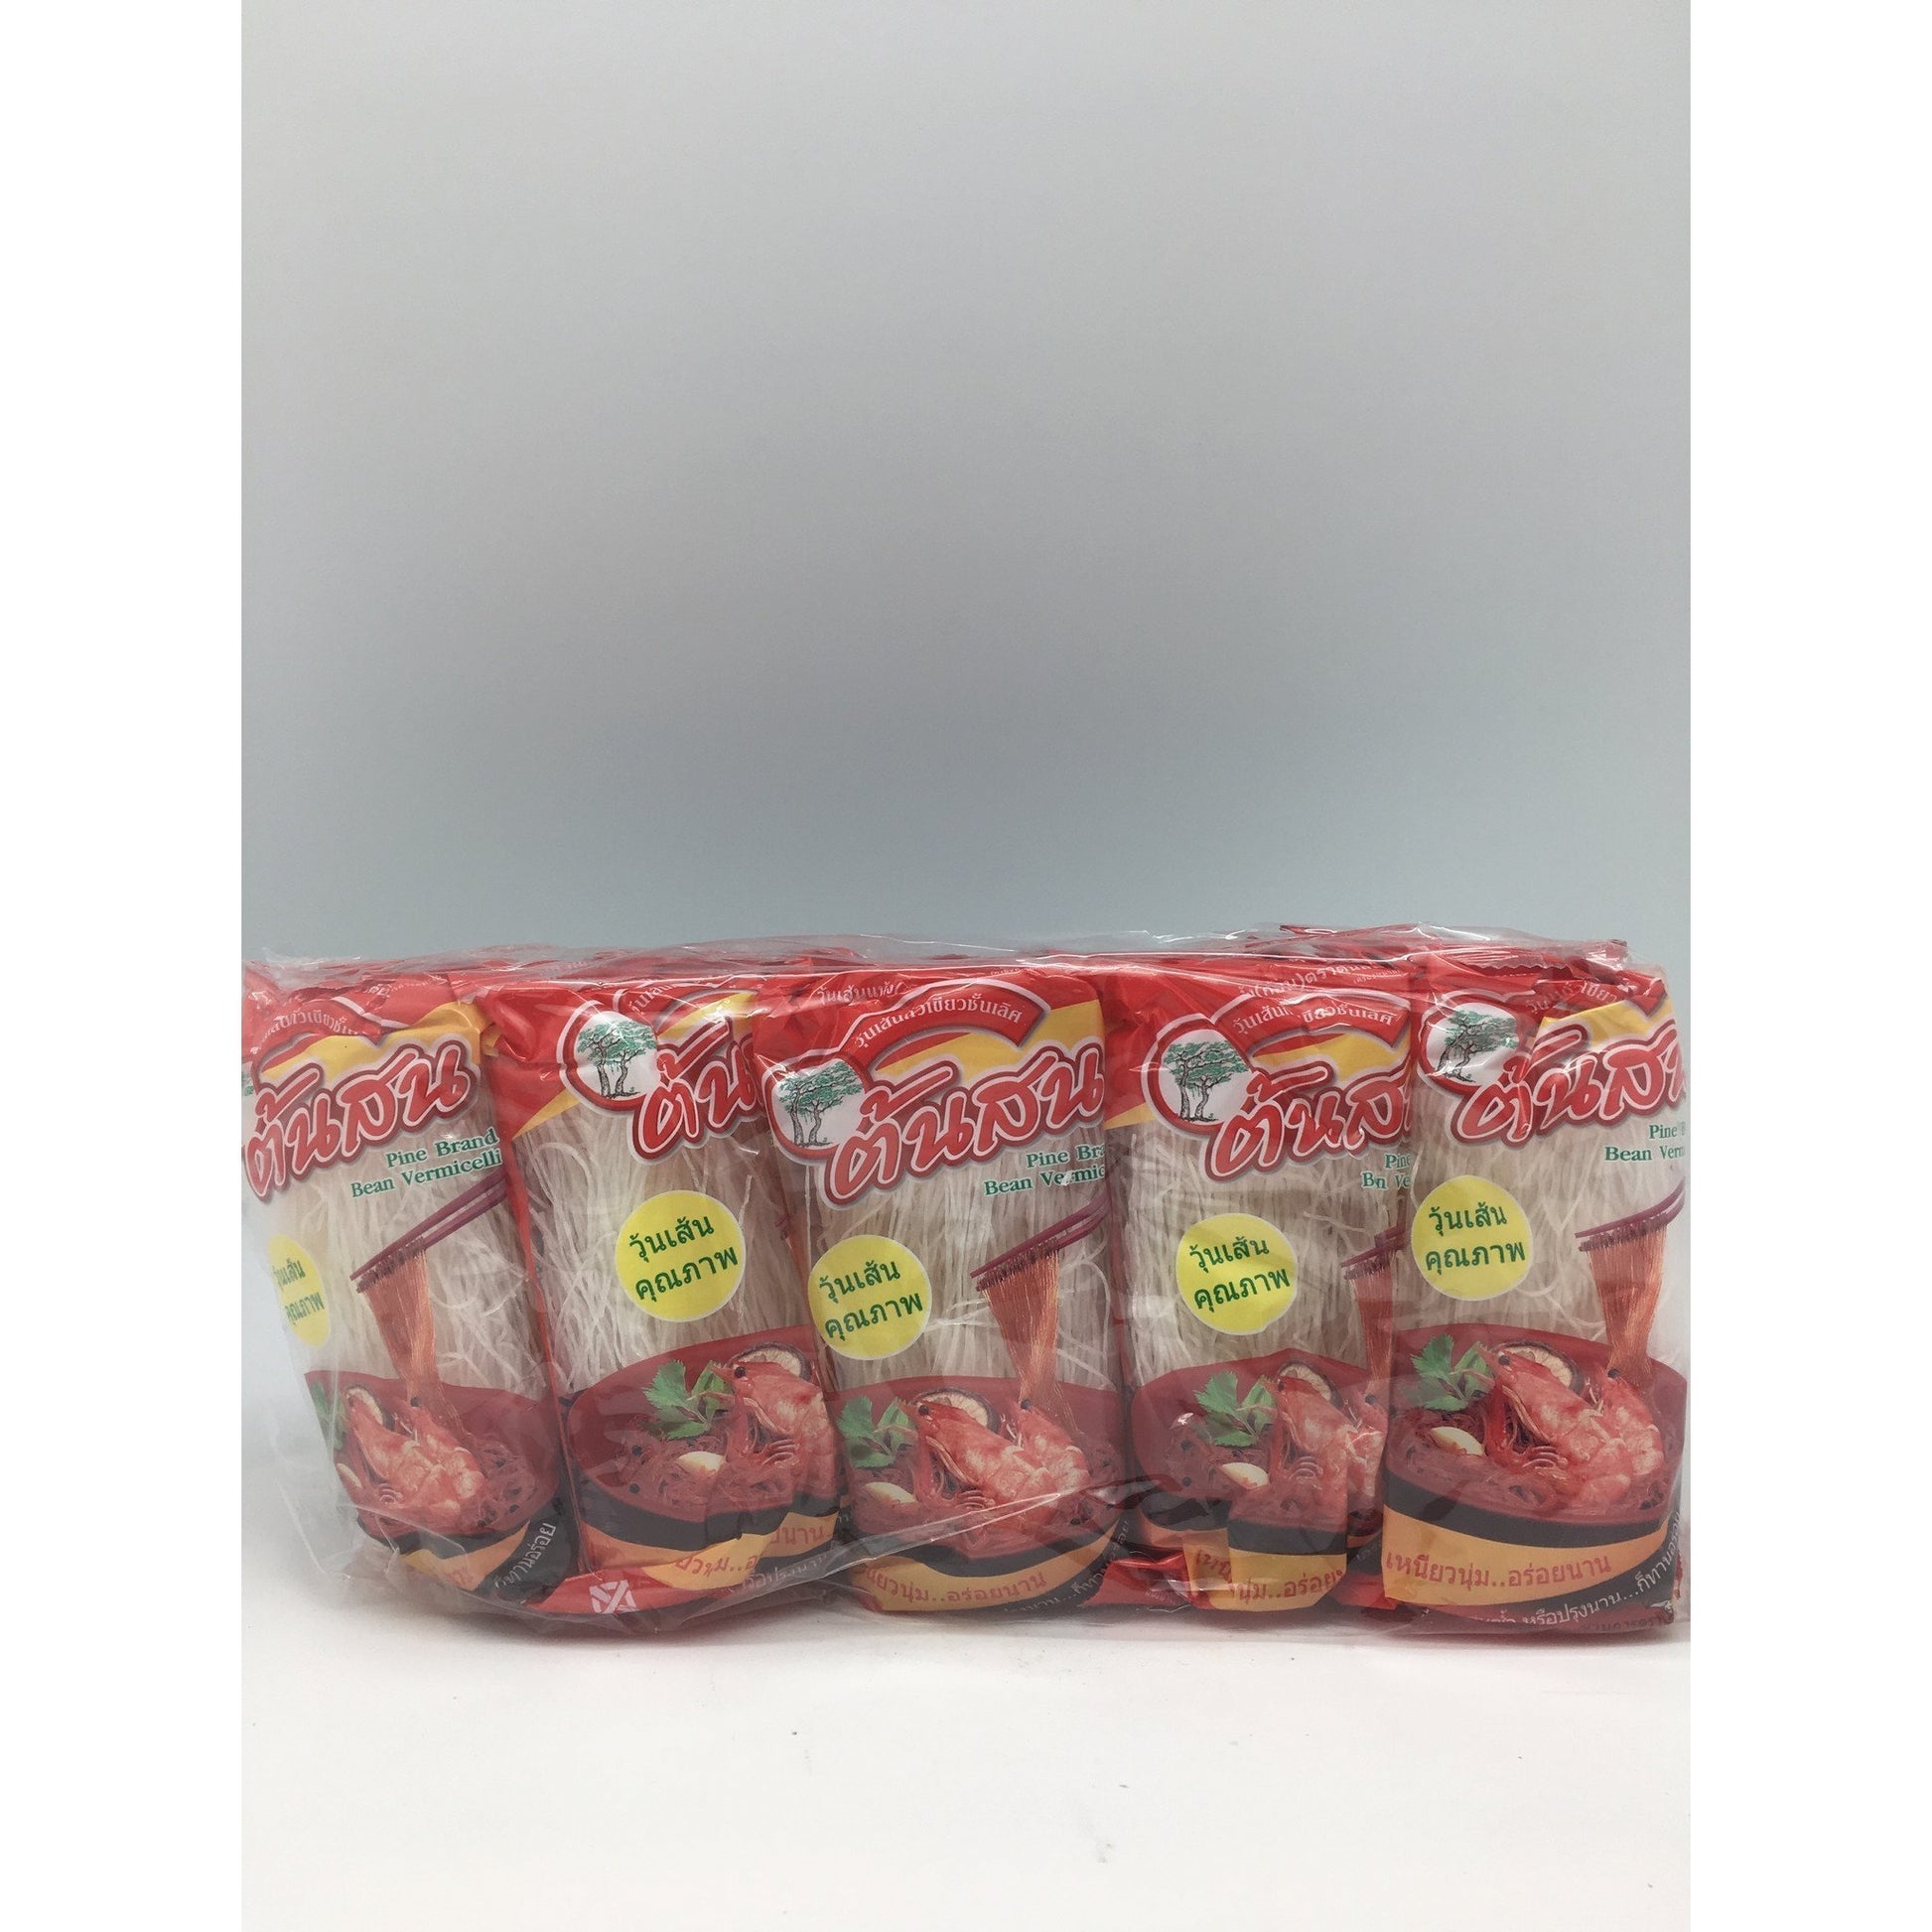 N031S Pine Brand - Bean Vermicilli 10 x 40g - 25 bags / 1CTN - New Eastland Pty Ltd - Asian food wholesalers